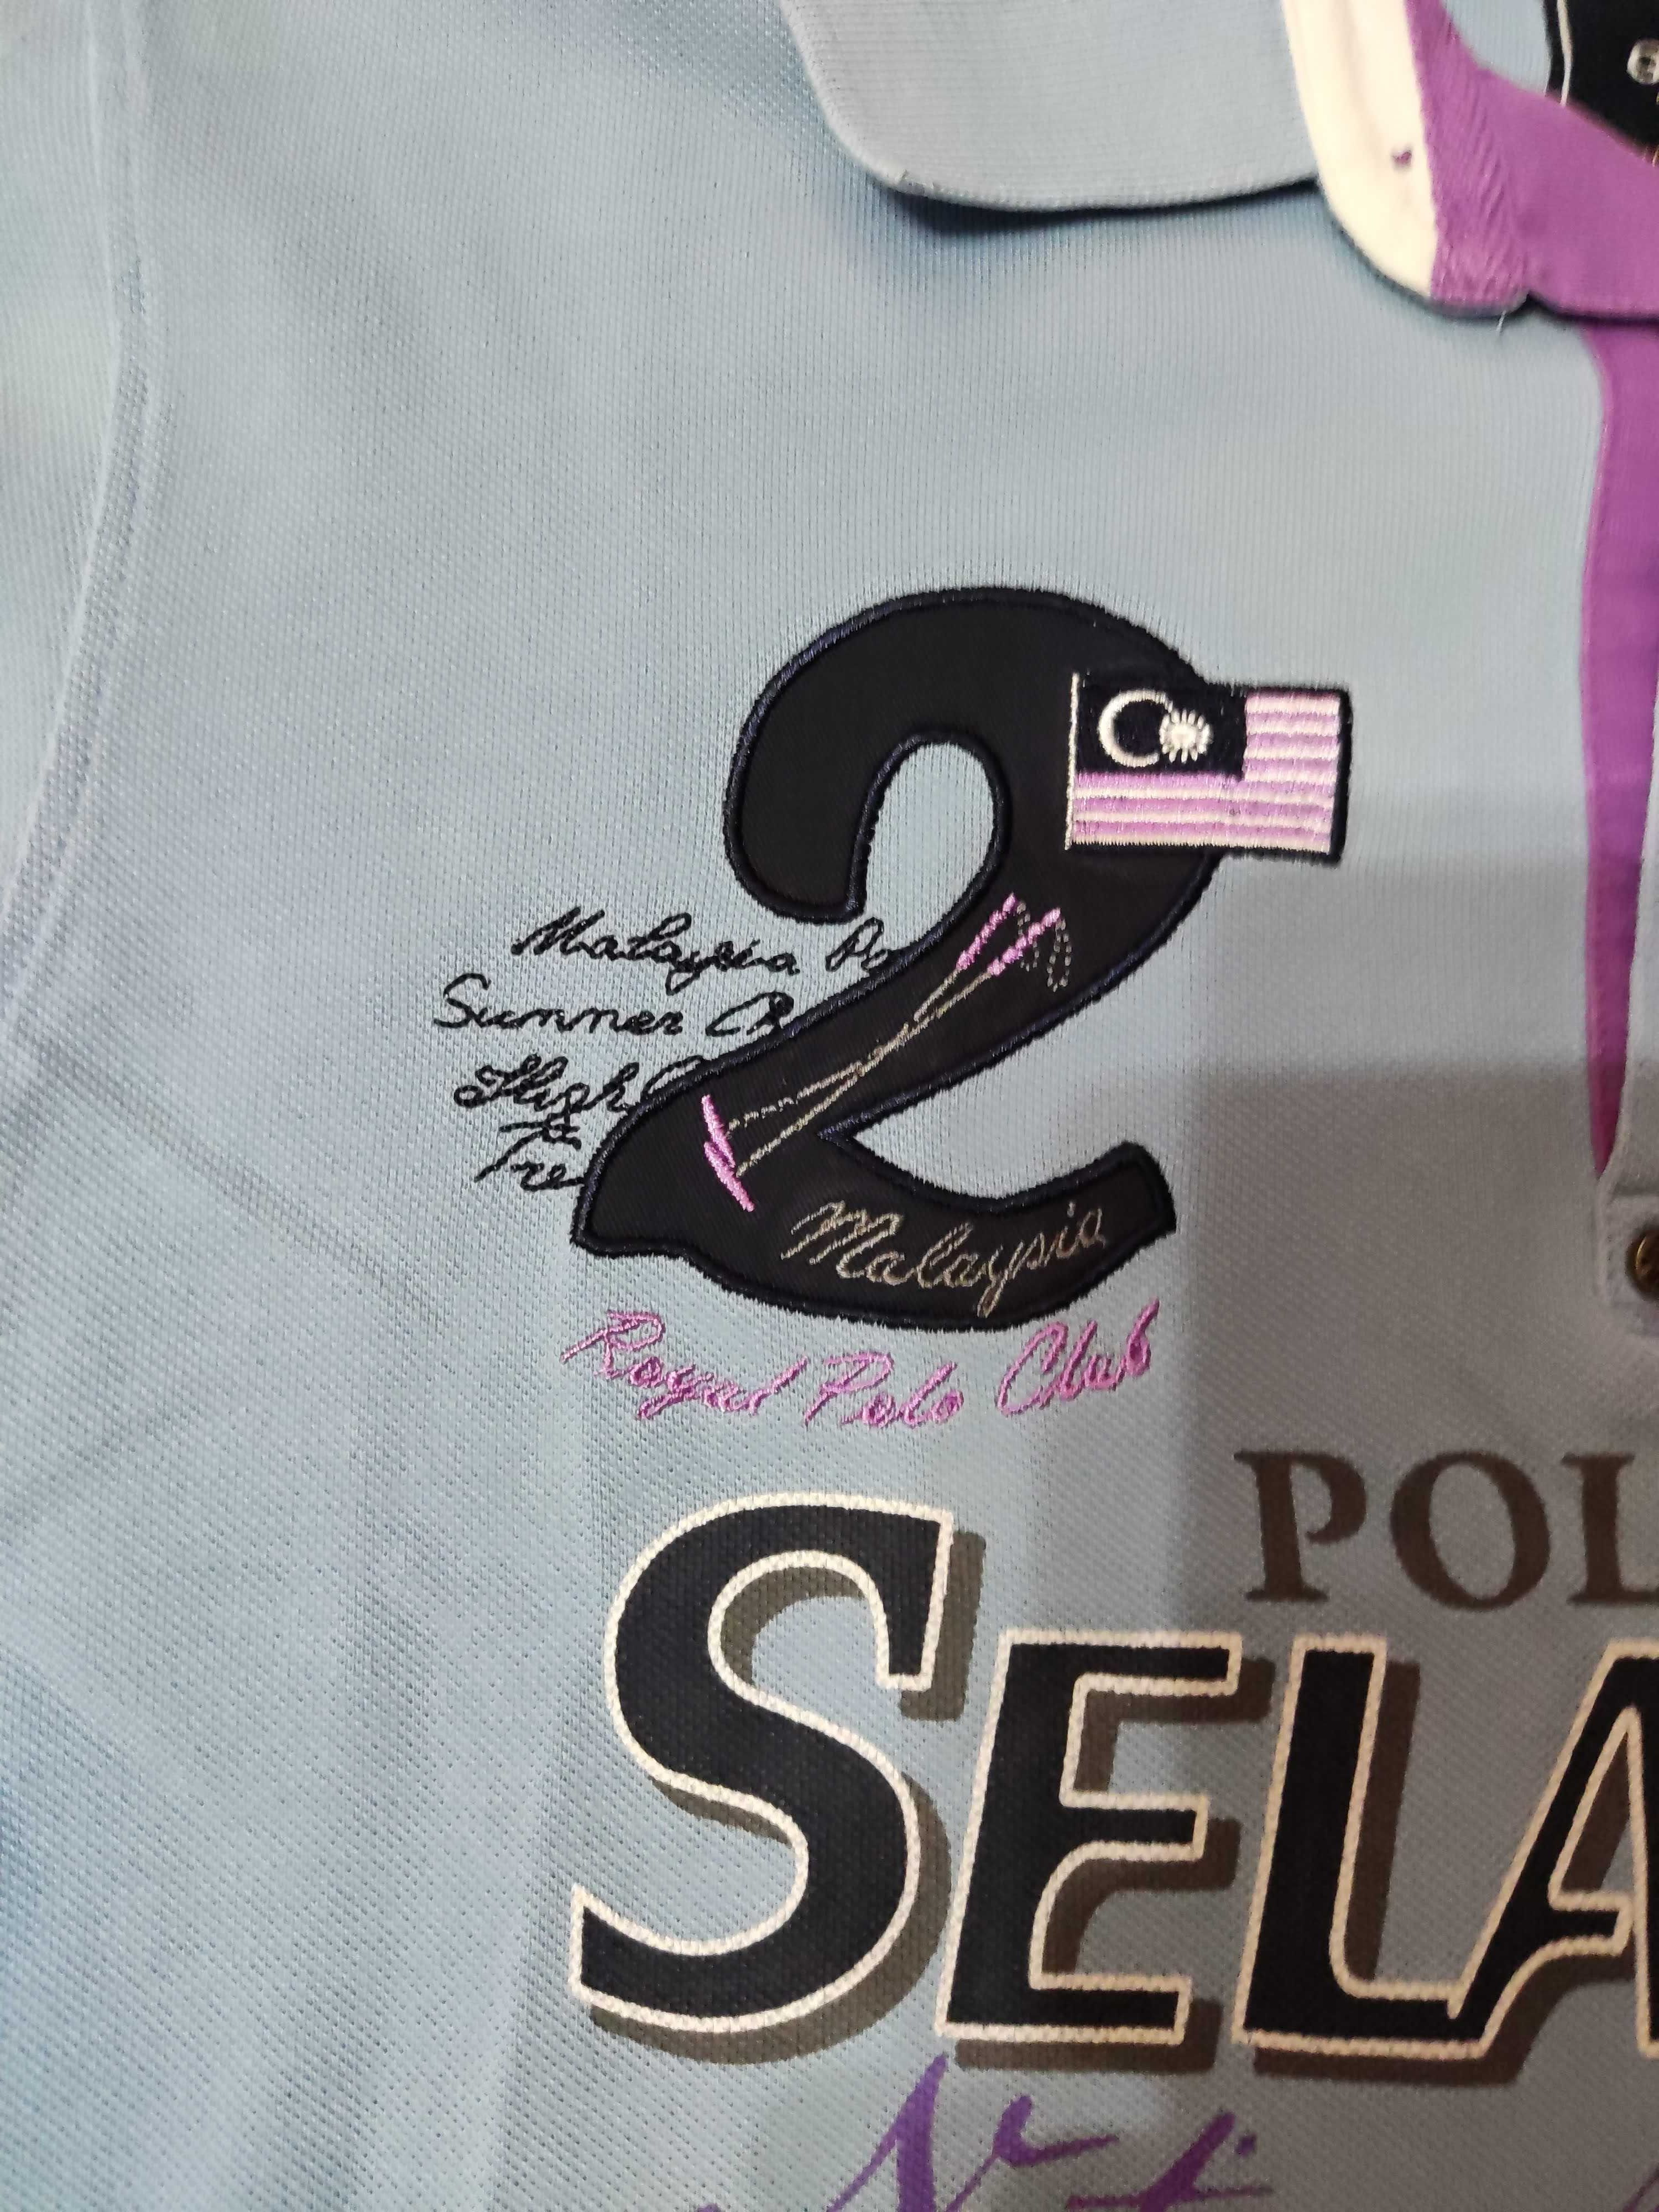 Tricou Polo Galvanni Malaysia Polo Team Ralph Tommy jeans